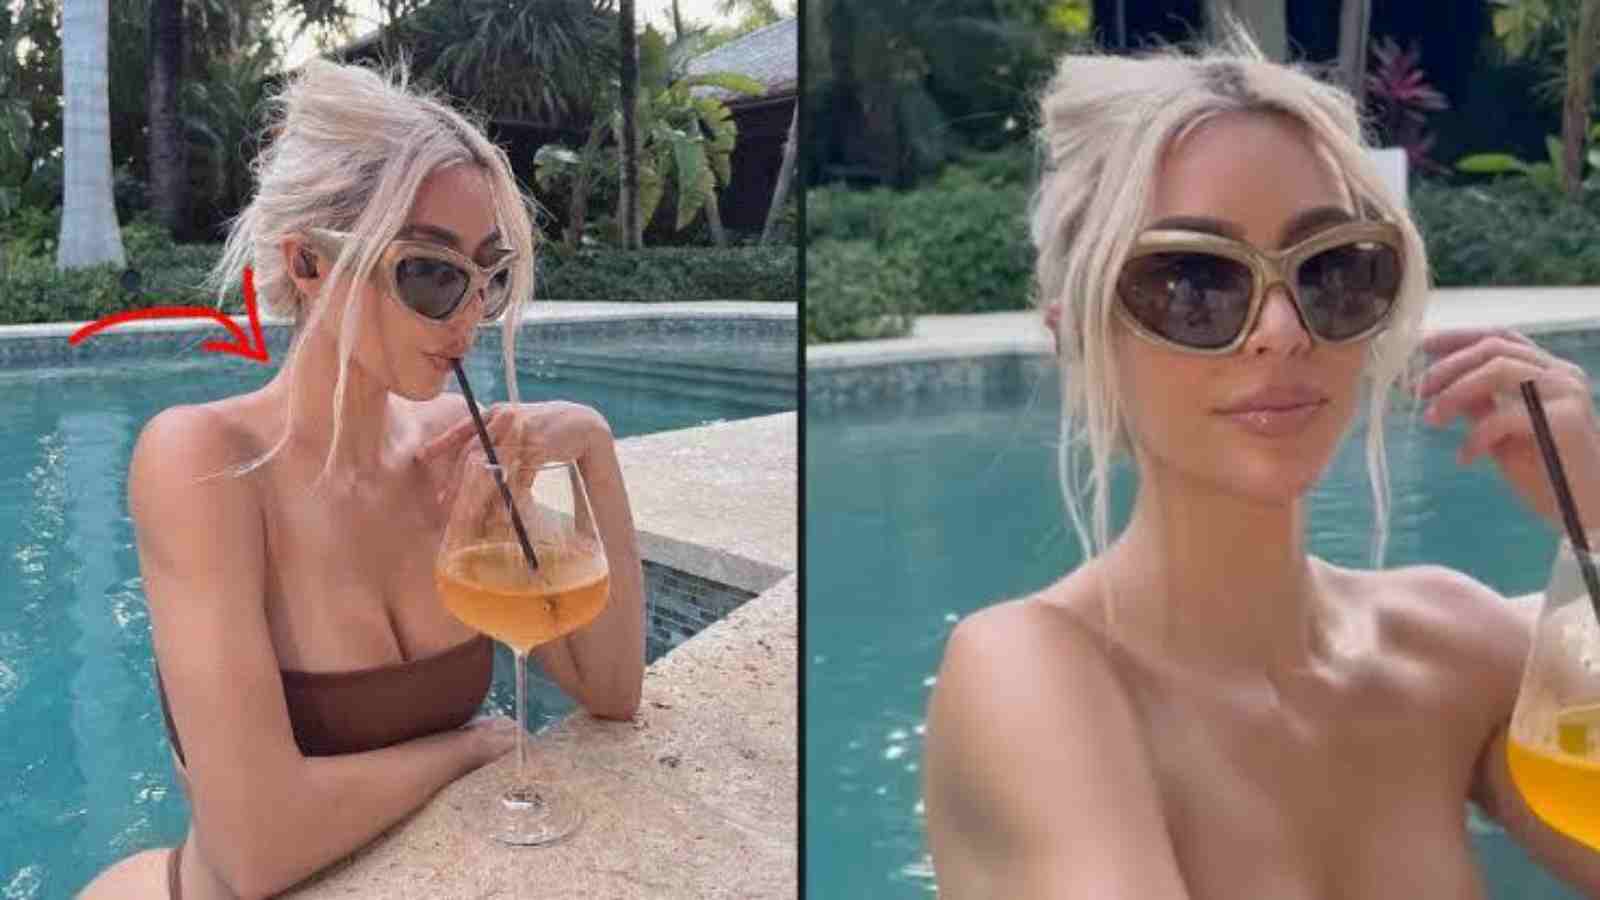 Tiktoker, Caroline Ross, brings to light Kim Kardashian's attempt at photoshopping her neck to make it look thinner